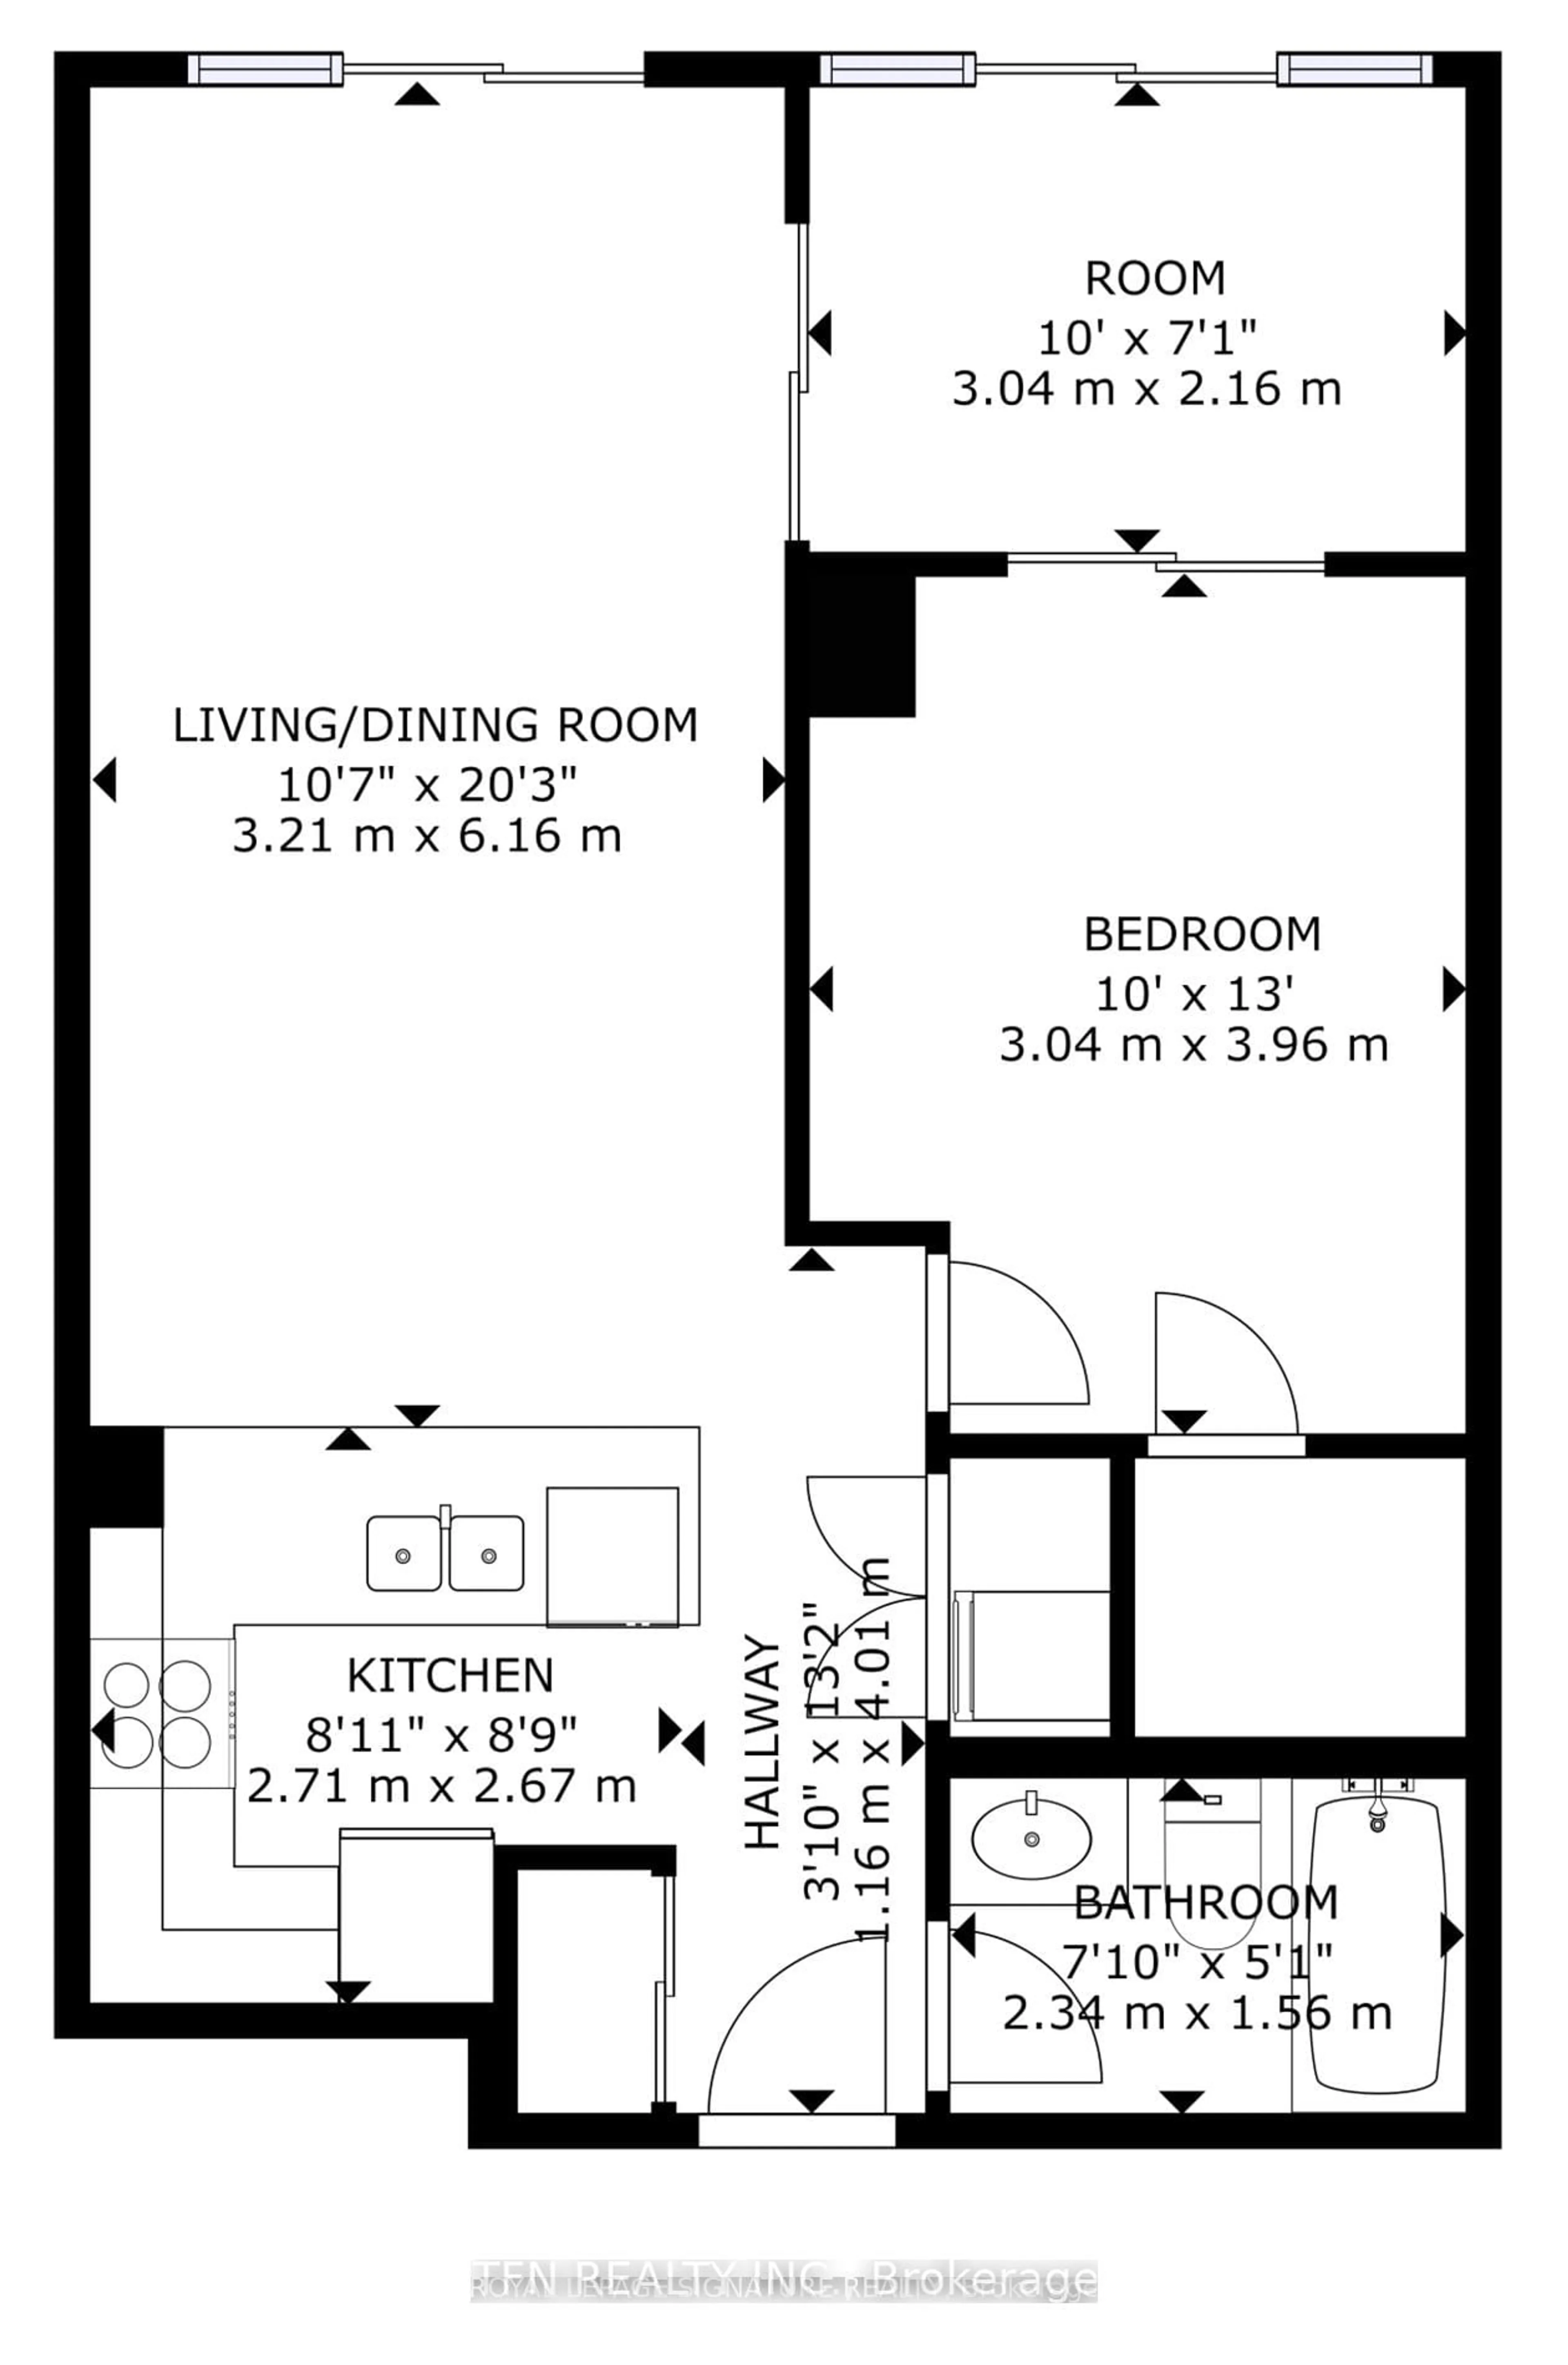 Floor plan for 225 Merton St #208, Toronto Ontario M4S 3H1